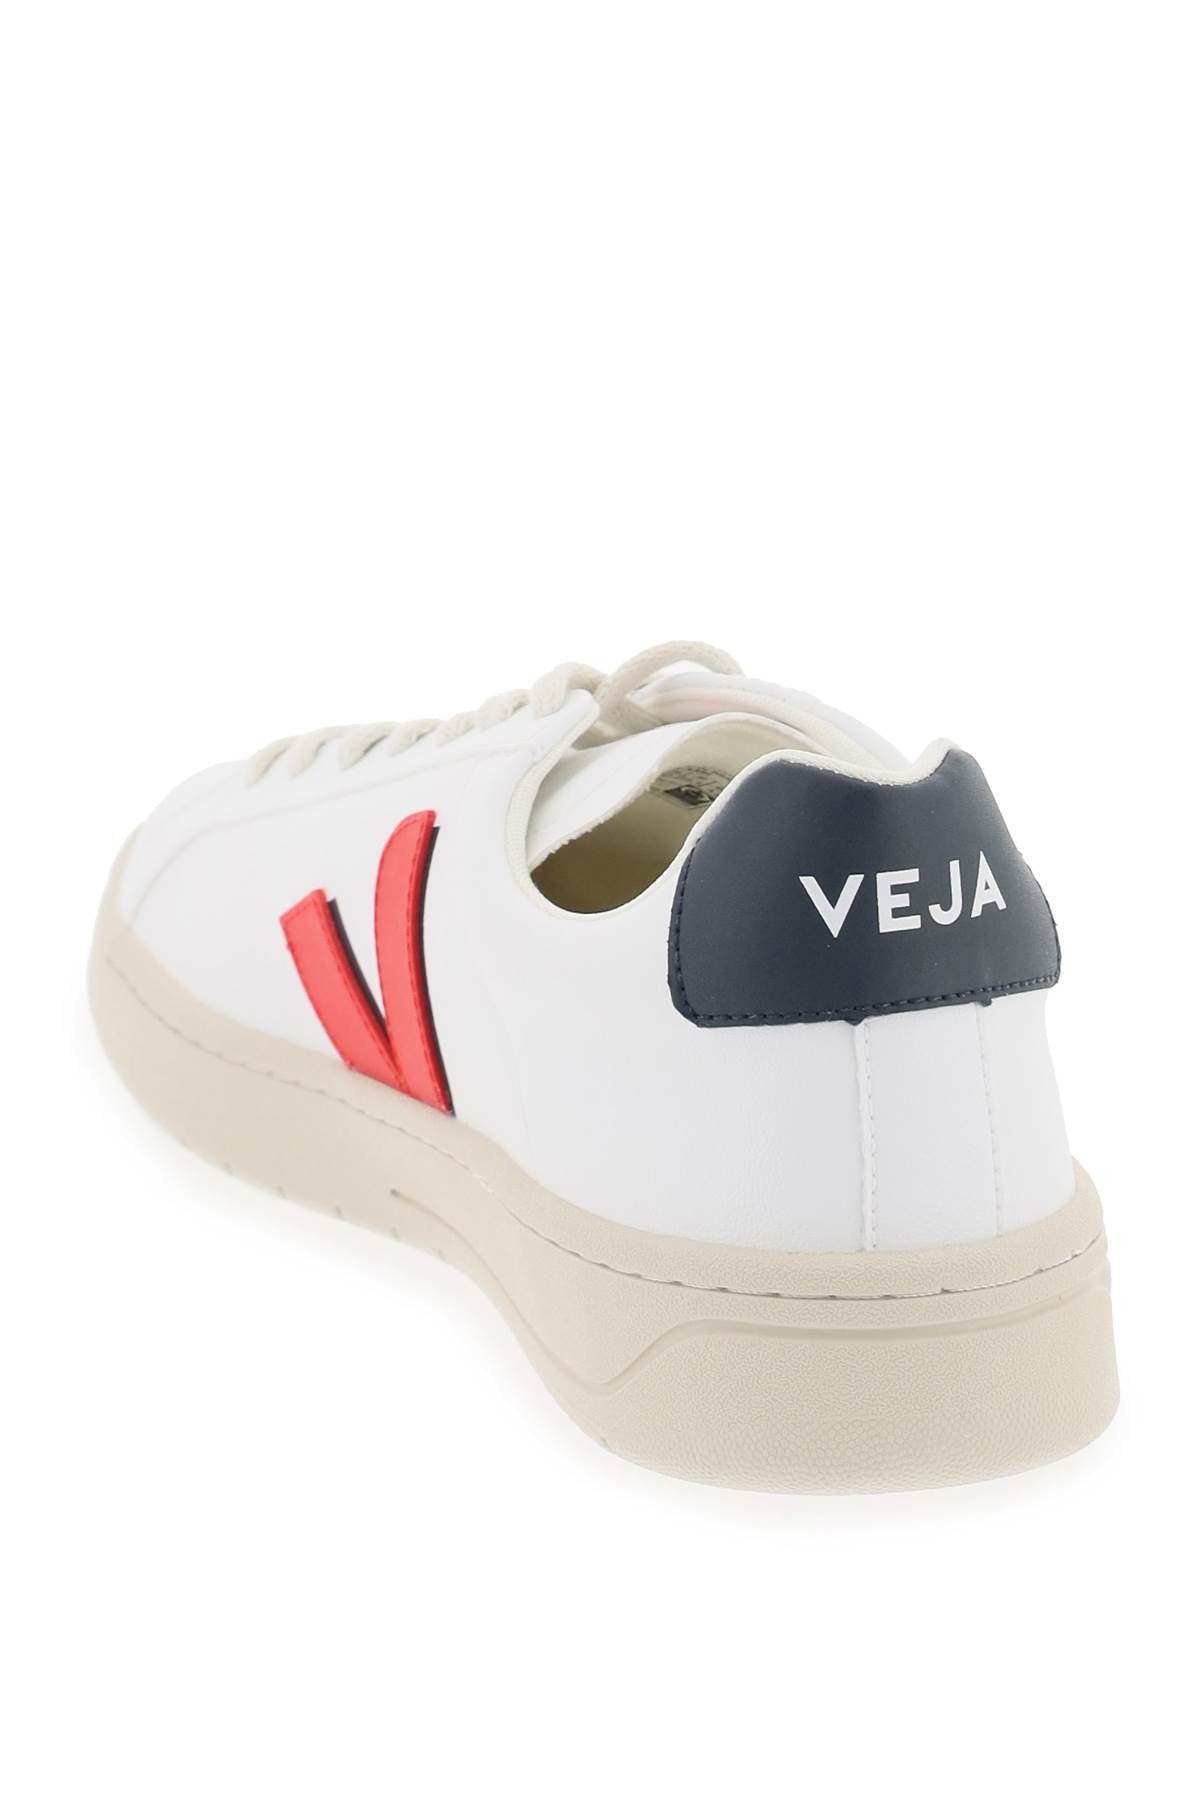 Shop Veja C.w.l. Urca Vegan Sneakers